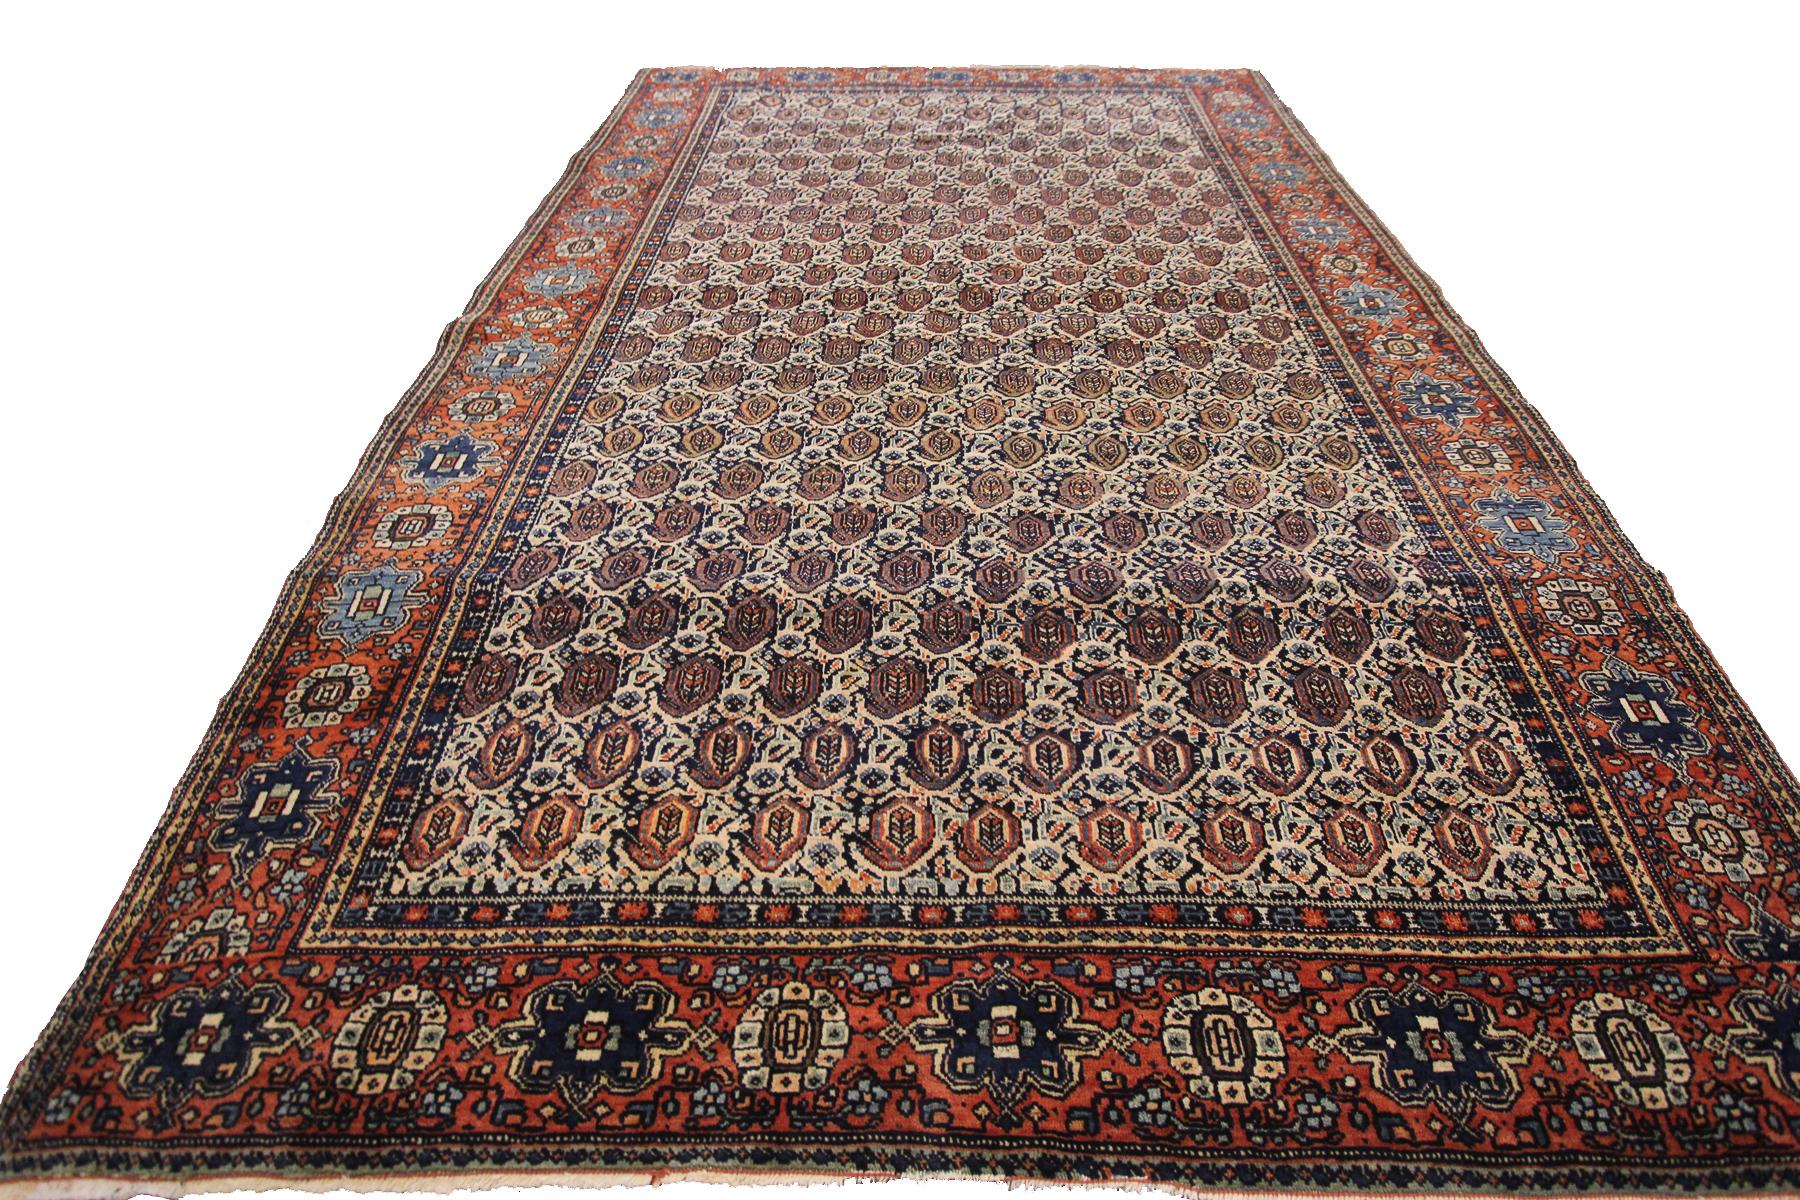 1890 antique Persian rug antique Persian rug Sarouk Farahan Geometric overall navy blue

Measures: 4'3